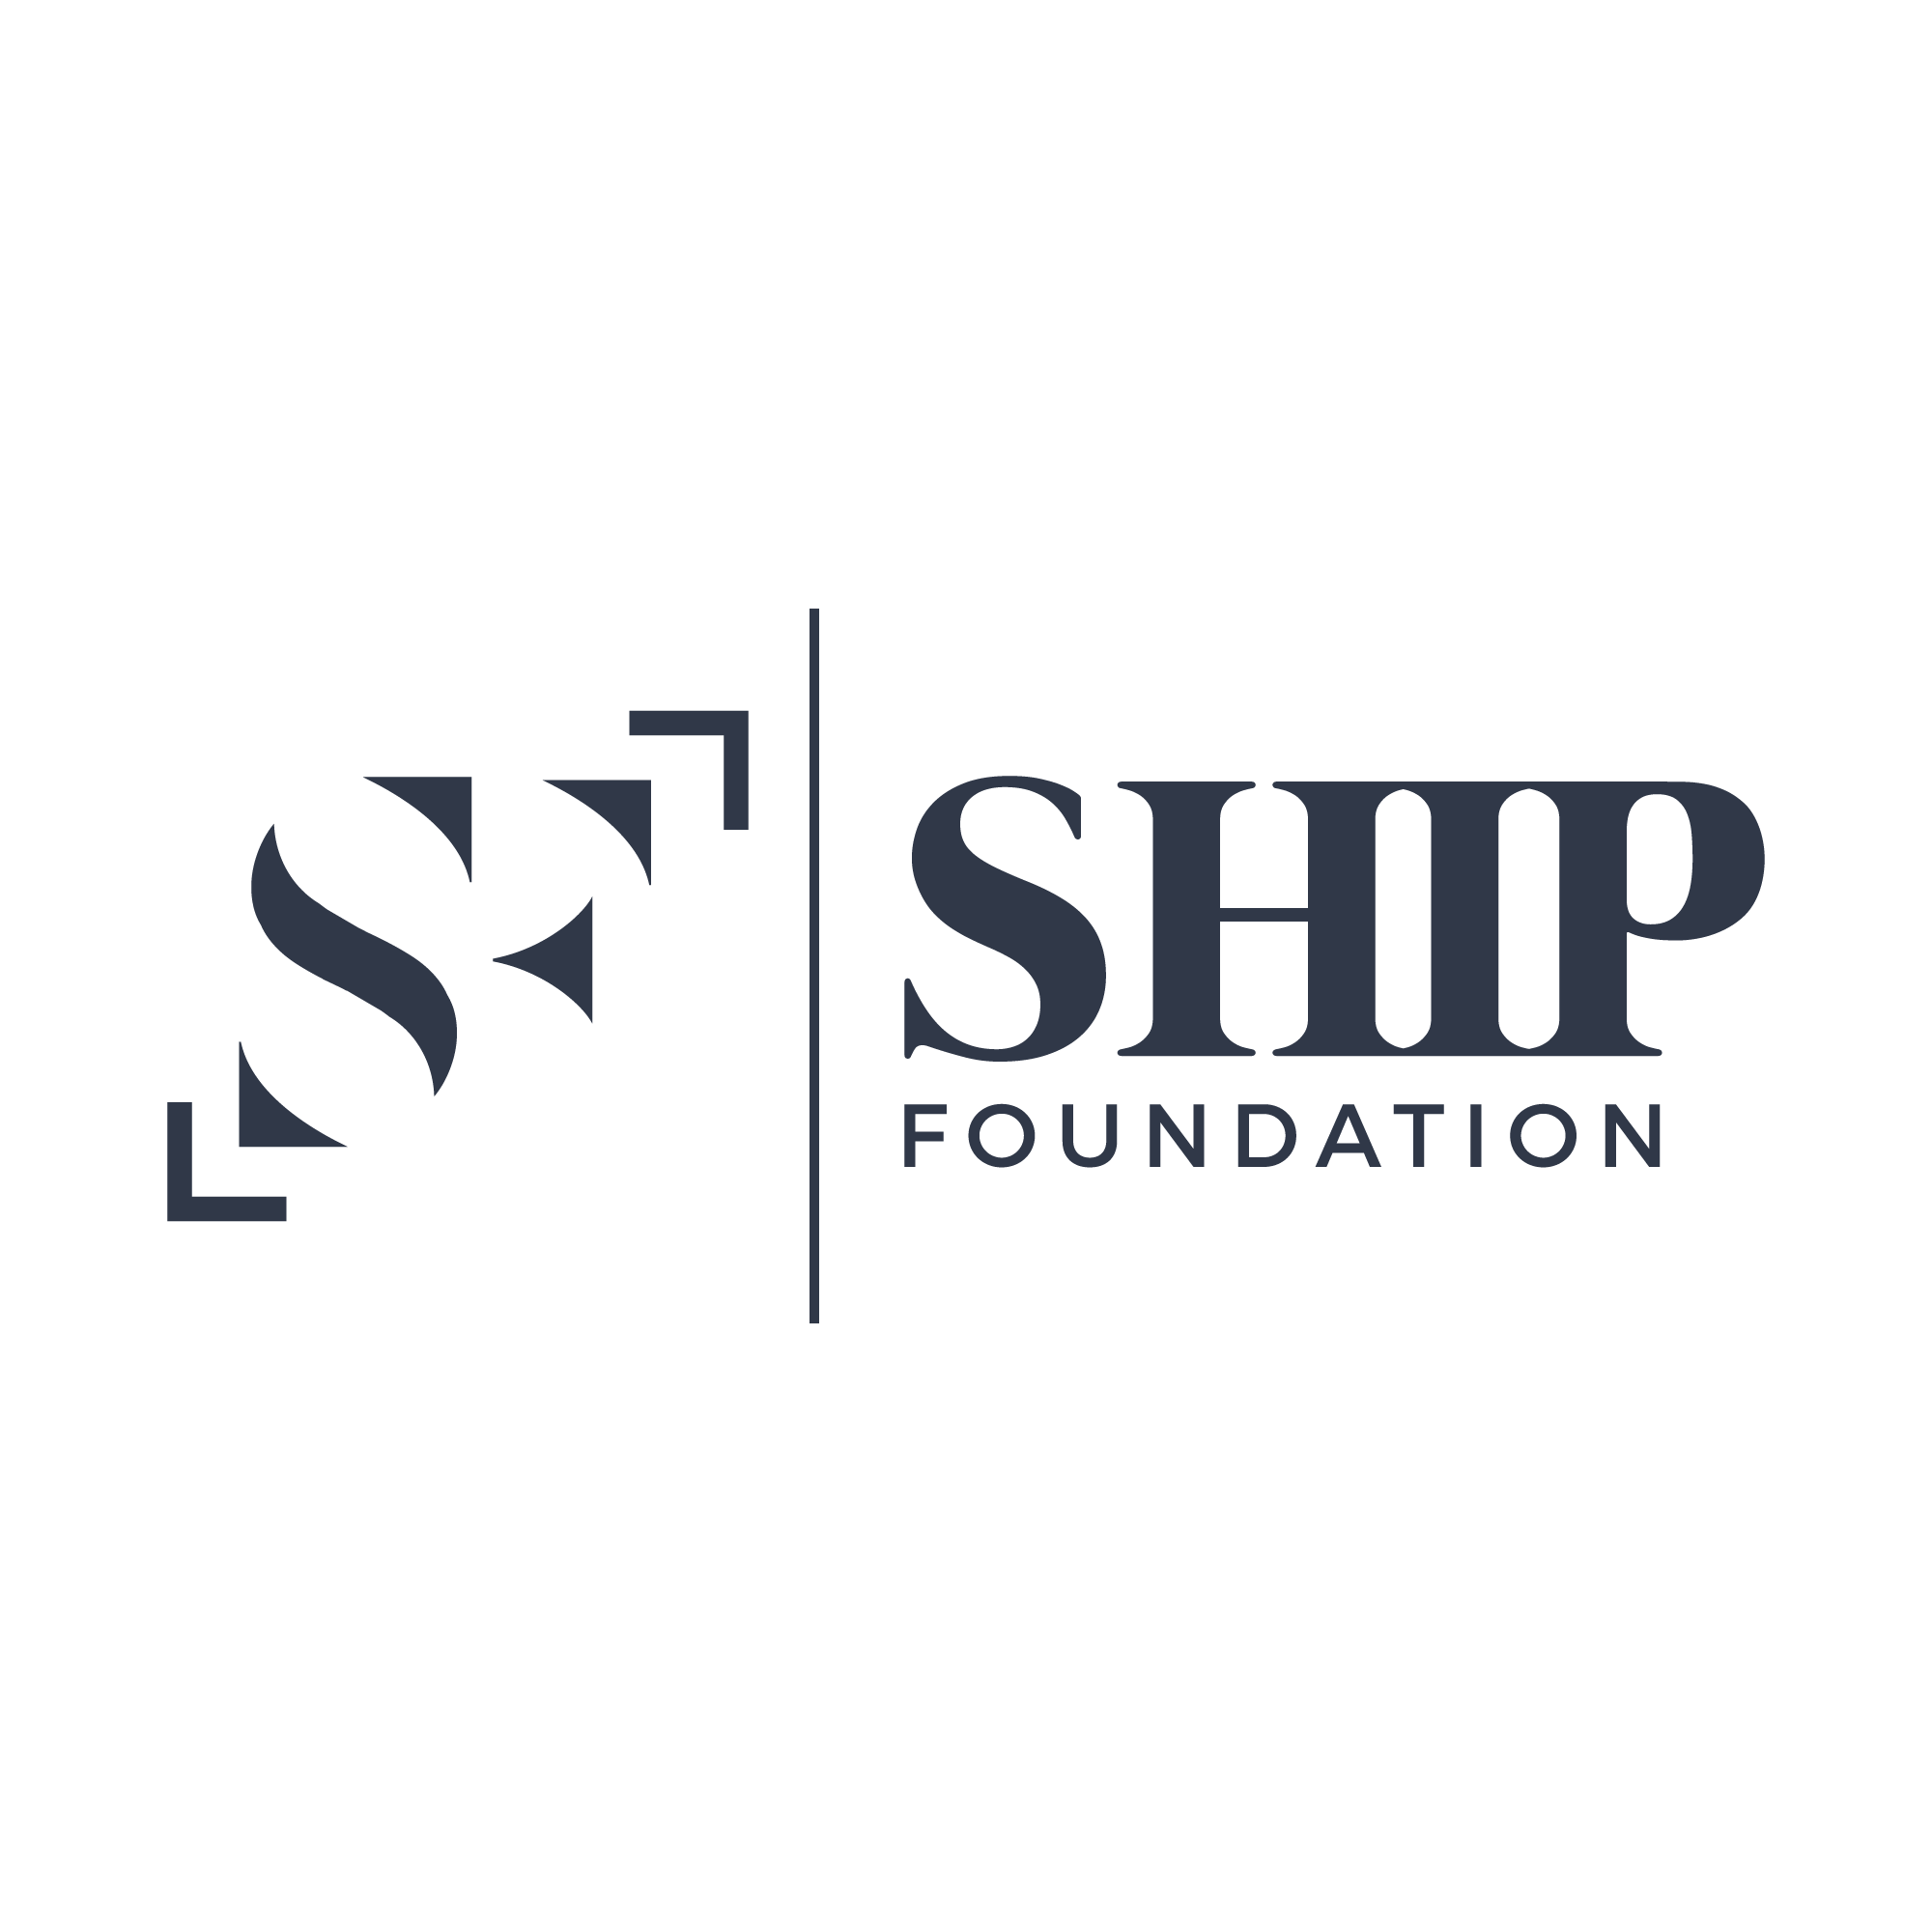 Ship Foundation